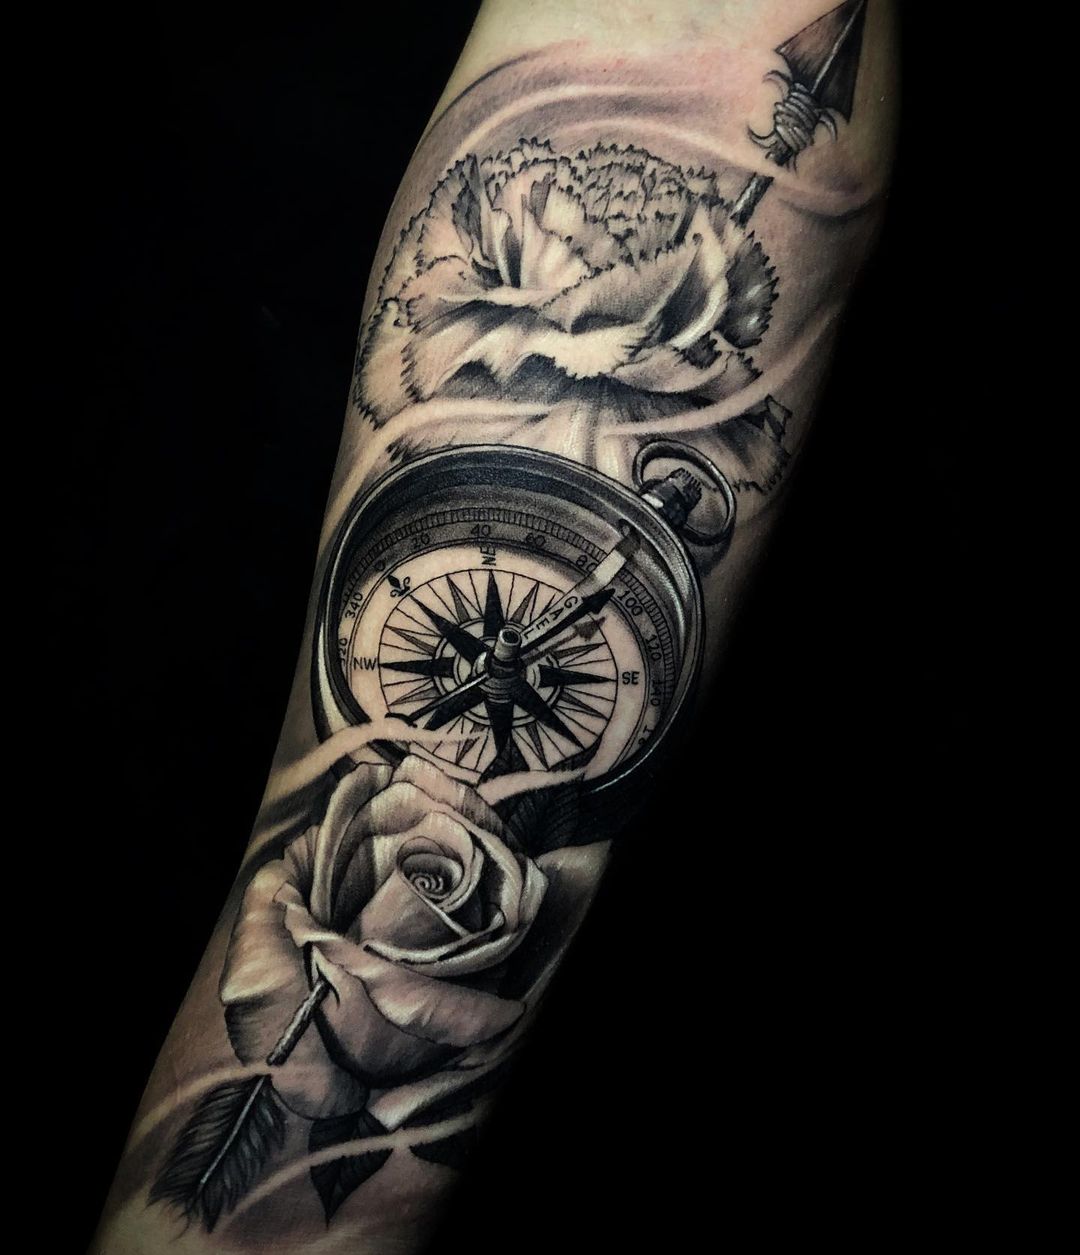 ship and compass tattoo design I made : r/TattooDesigns